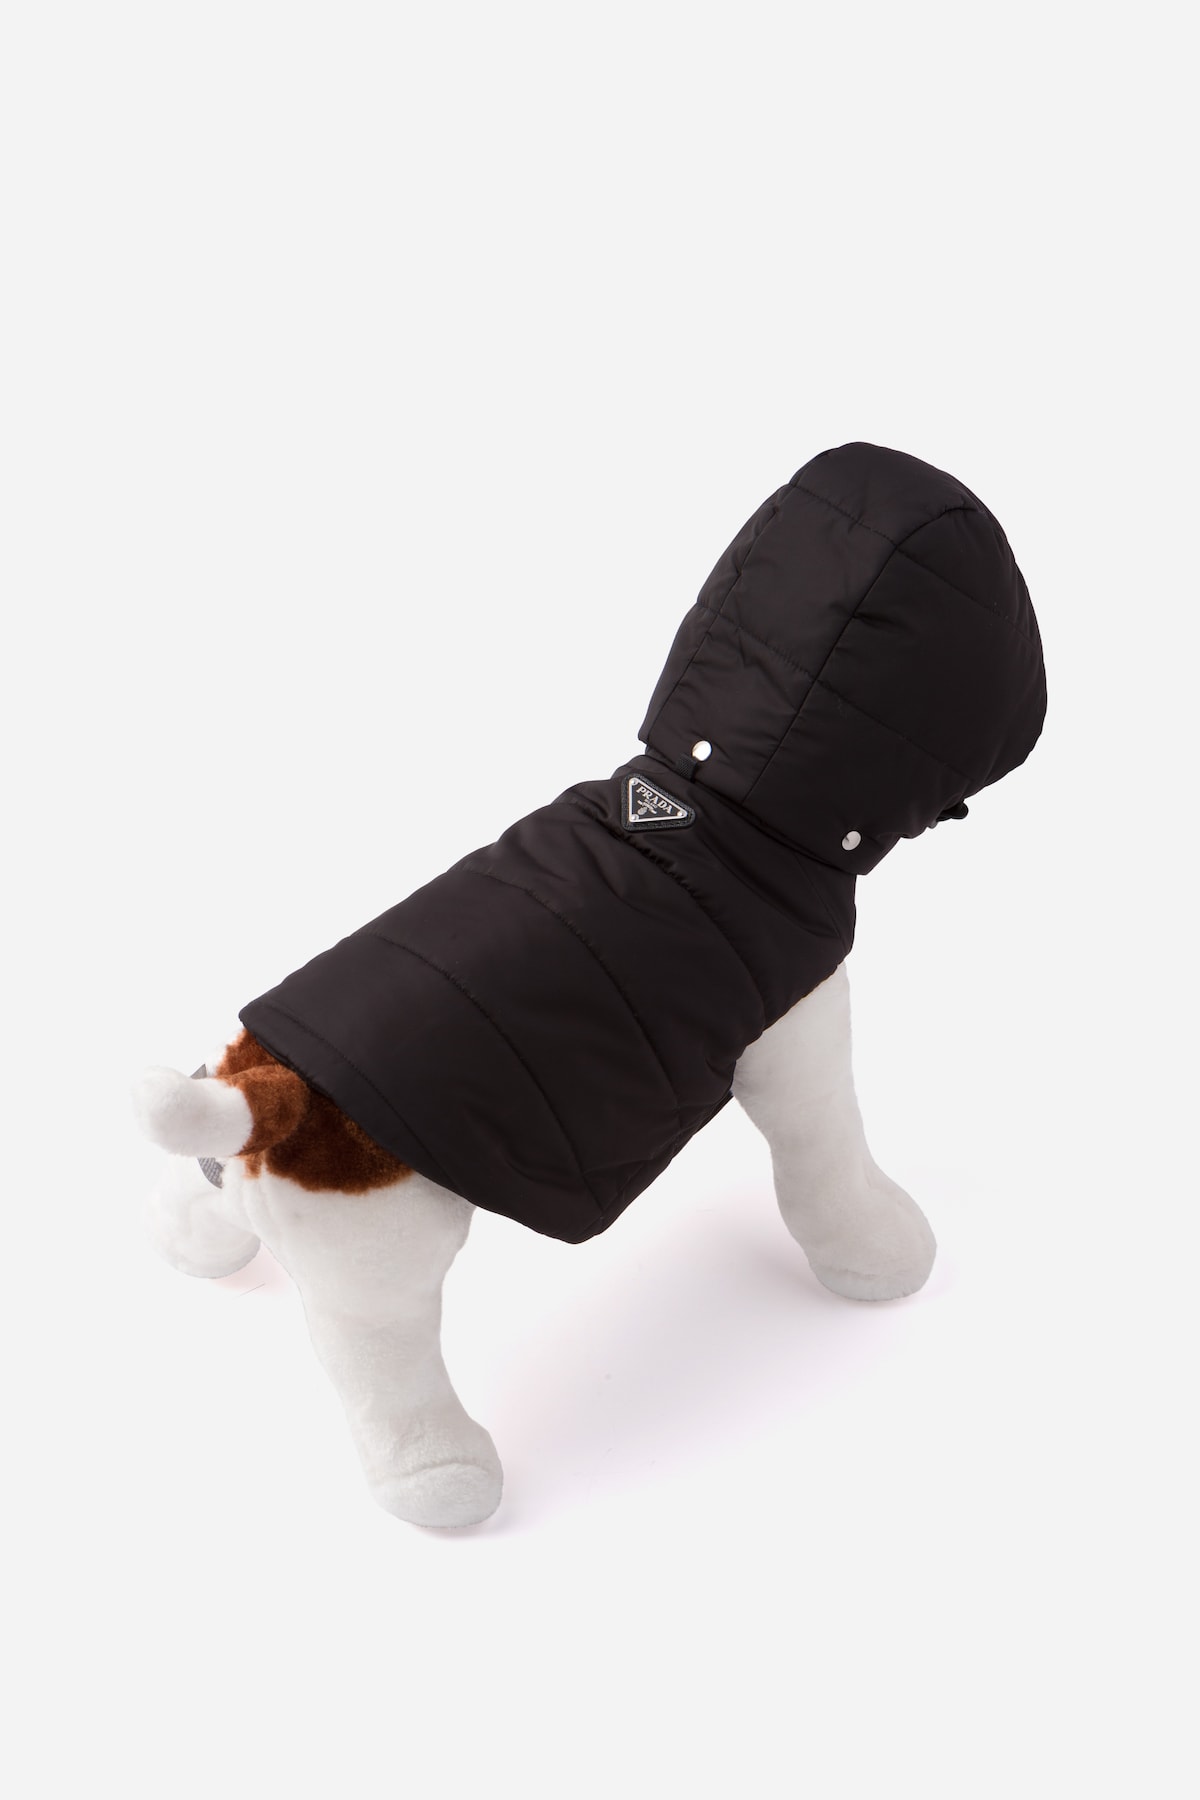 Prada Logo Dog Coats & Jackets Holiday 2020 Collection Pet Apparel Vest Puffer 